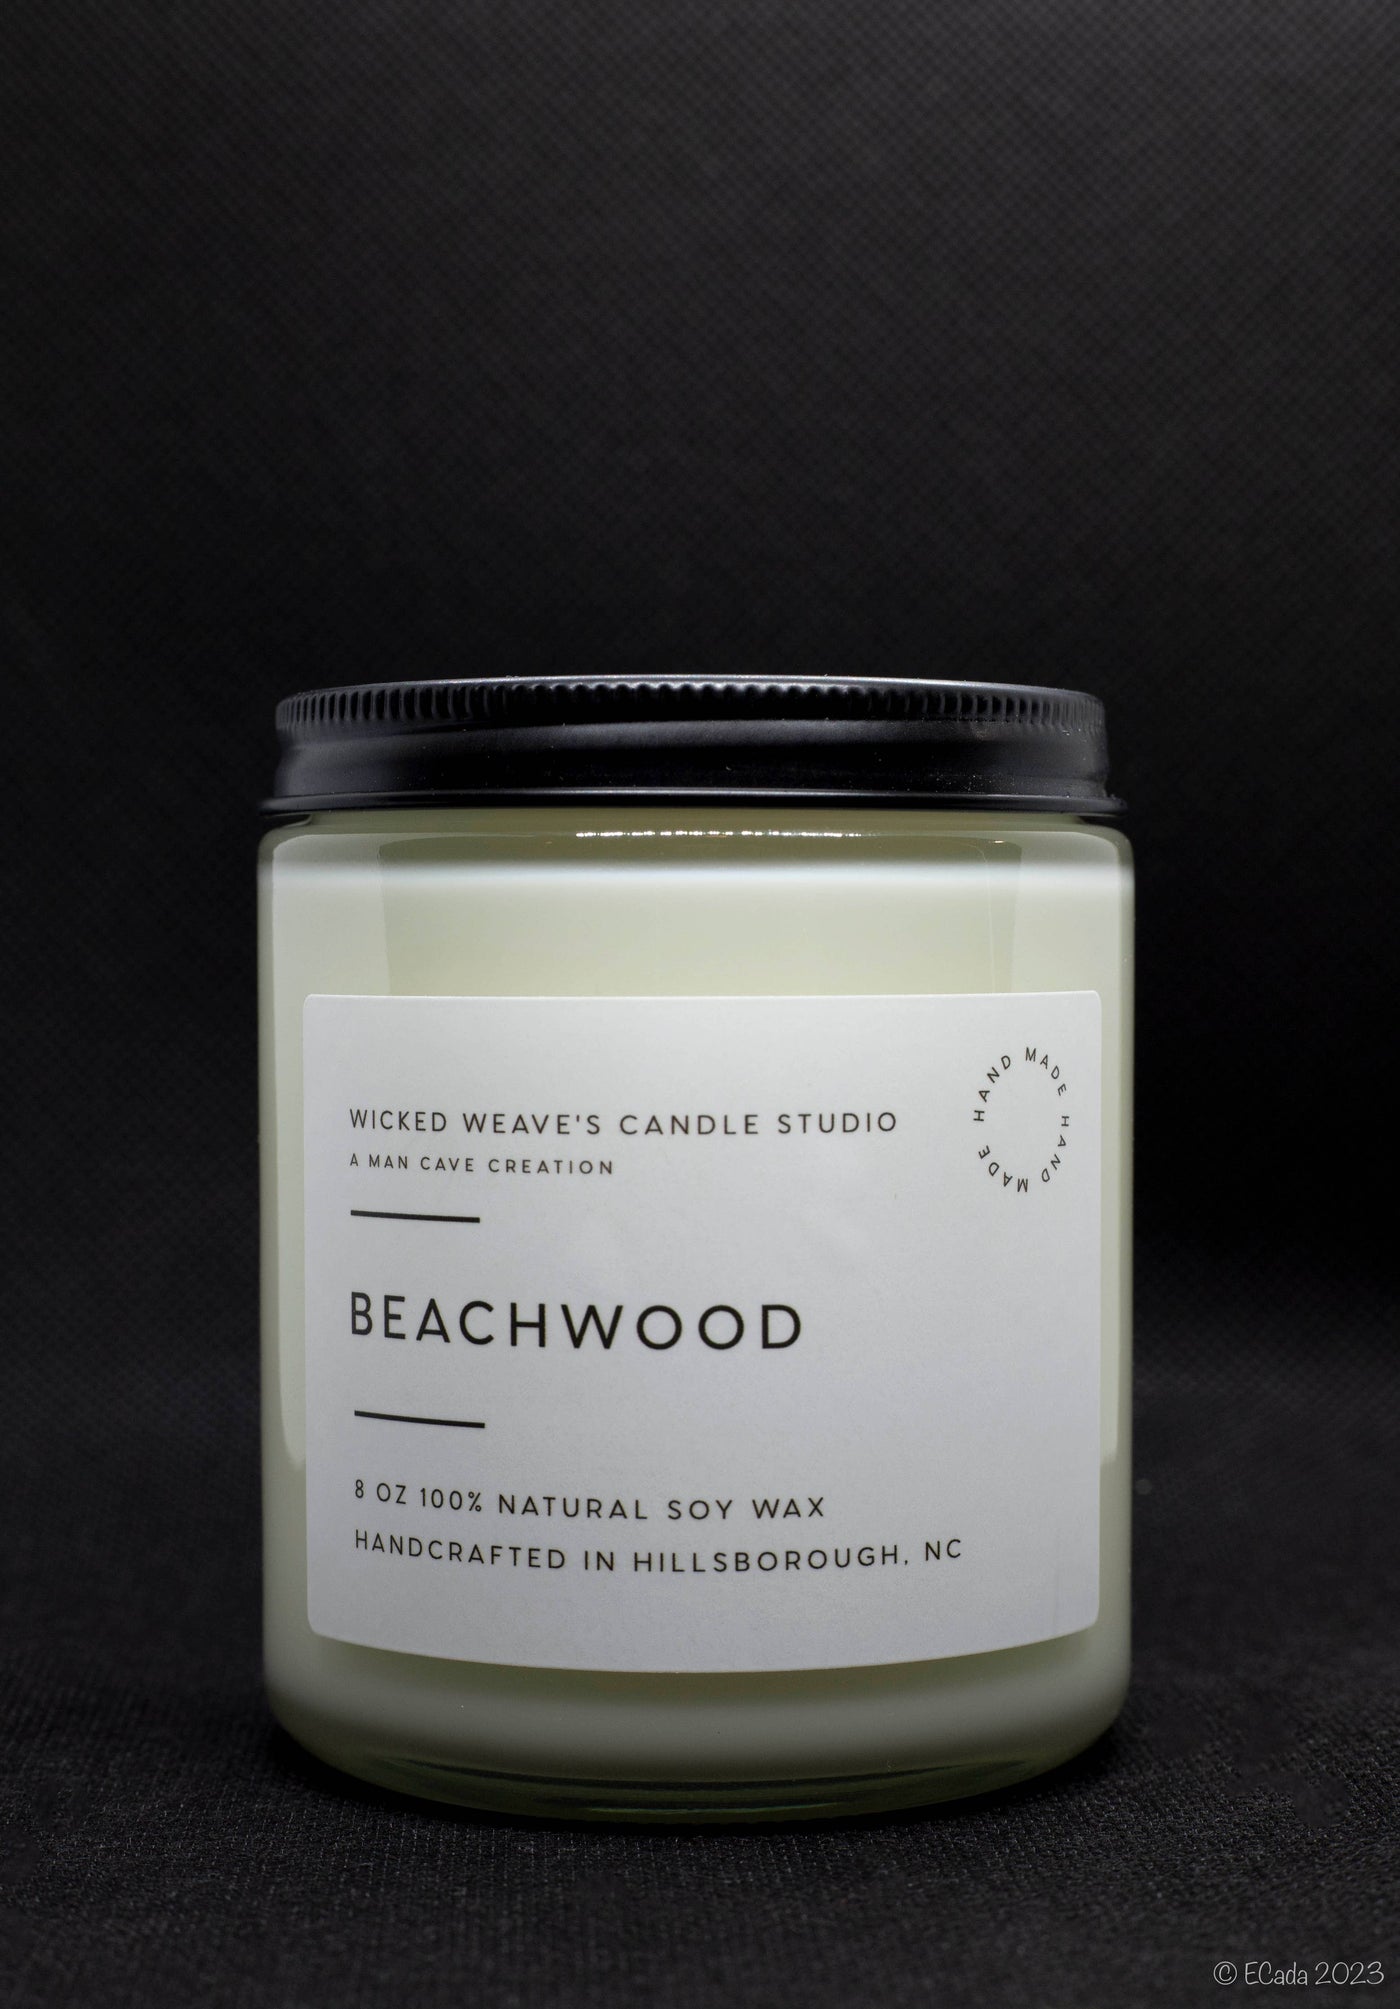 Beachwood 8 oz Jar Candle